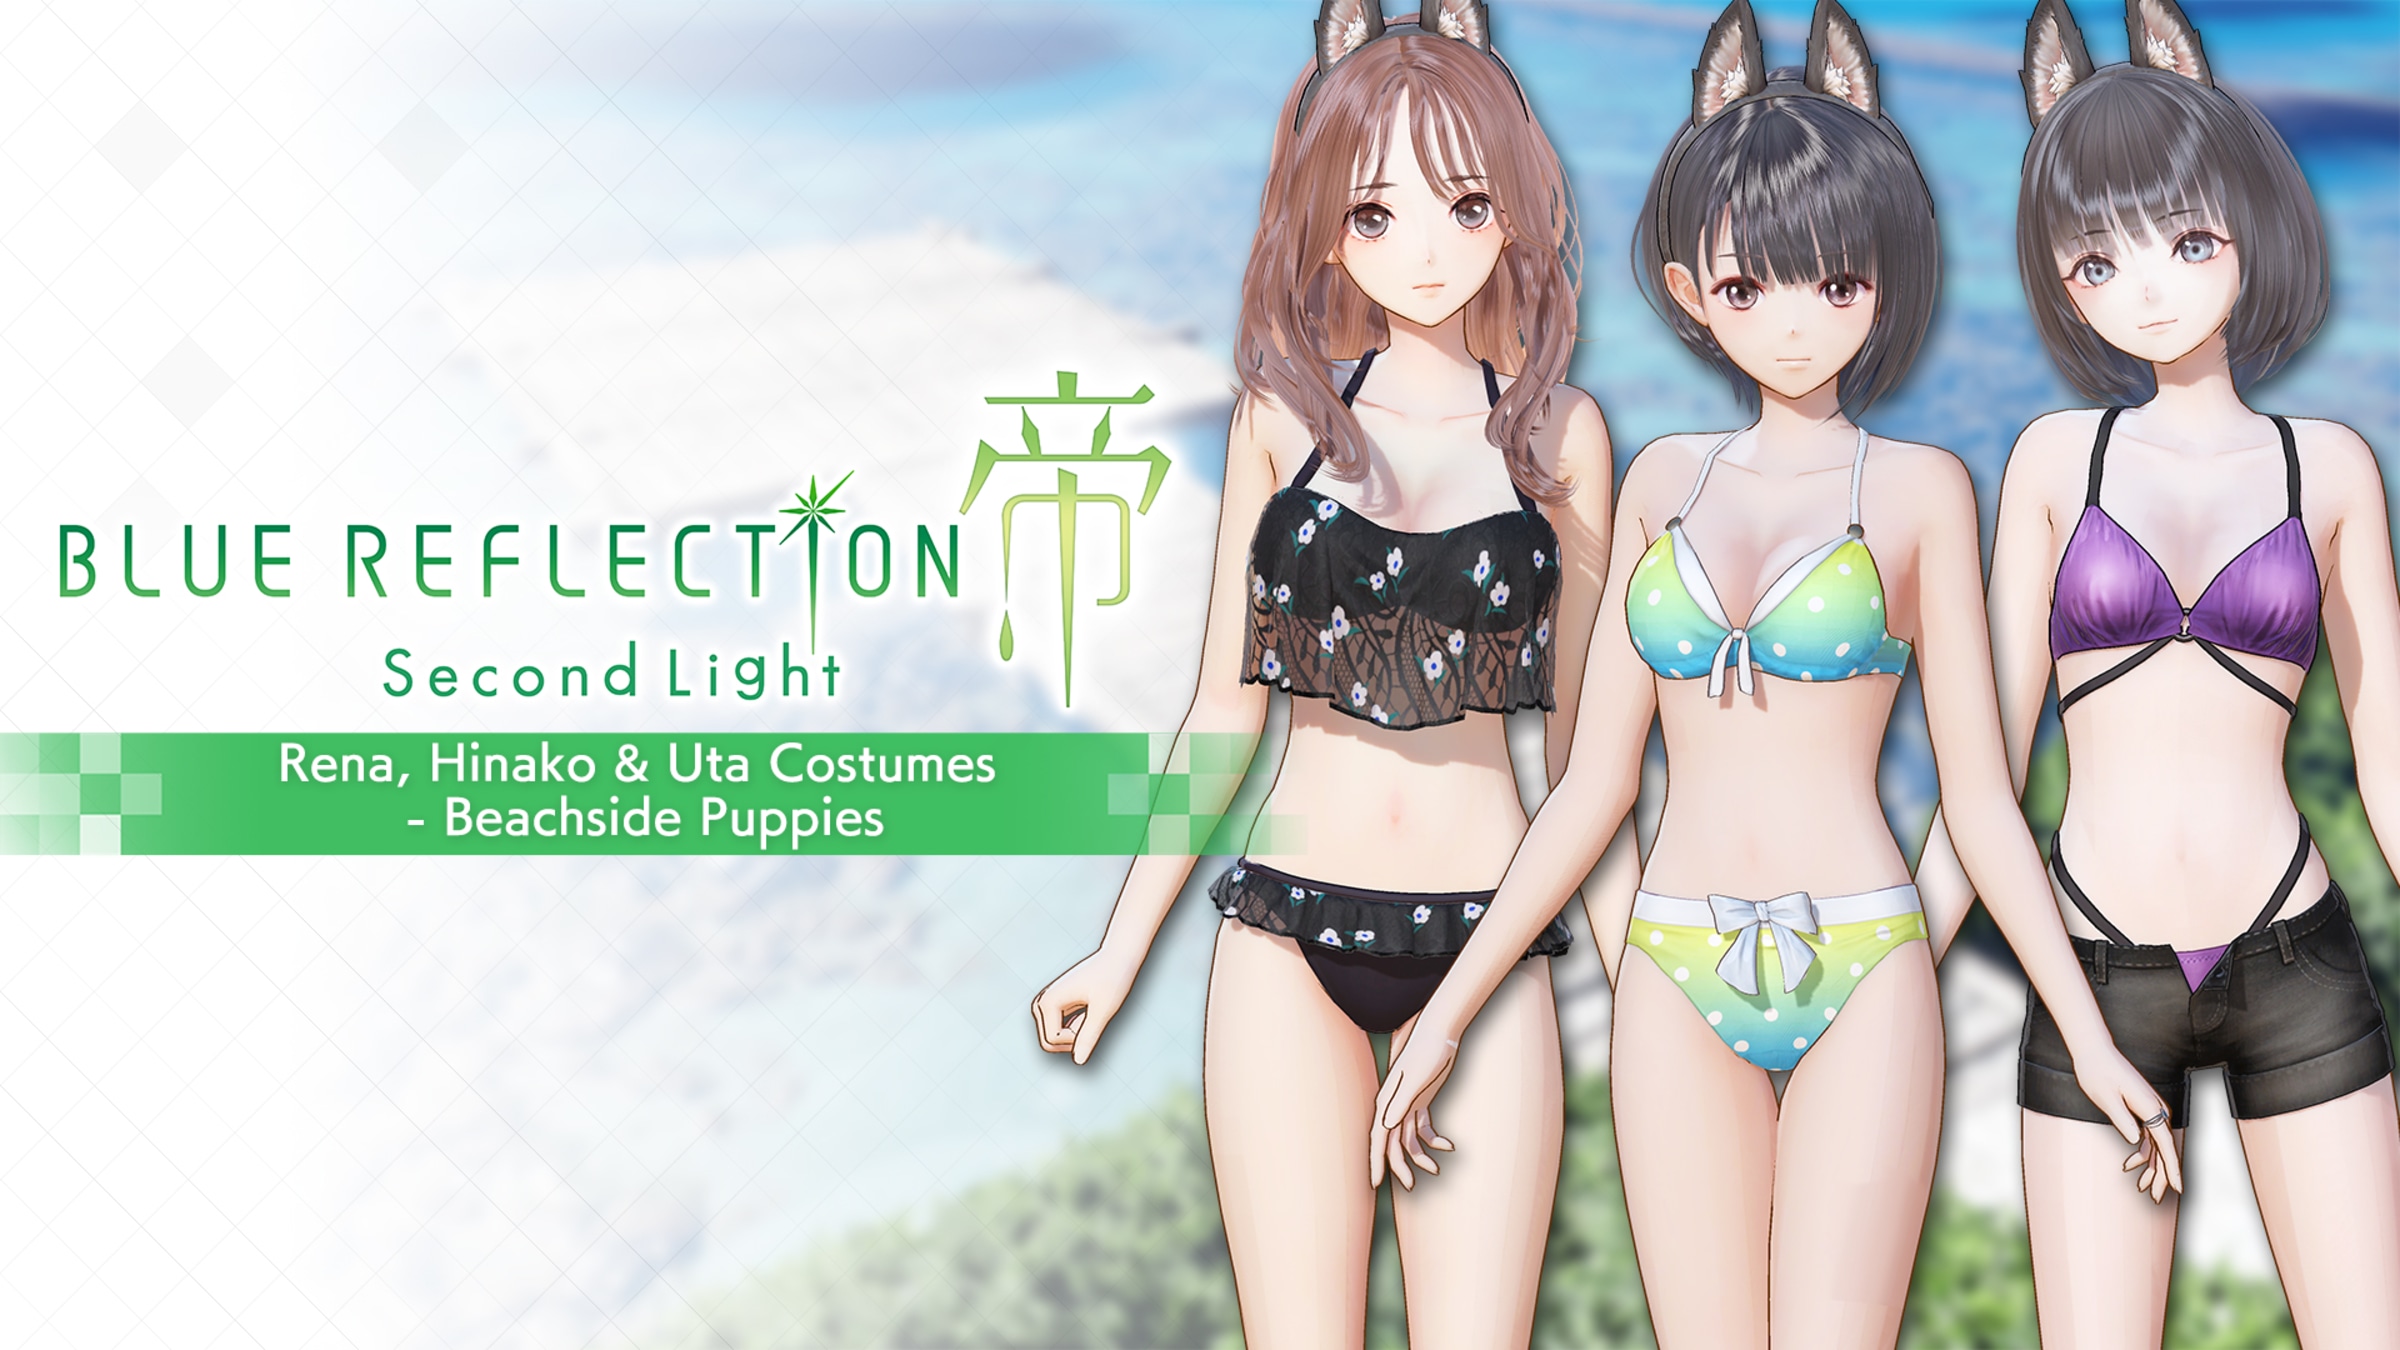 Rena, Hinako & Uta Costumes - Beachside Puppies para Nintendo Switch -  Sitio oficial de Nintendo